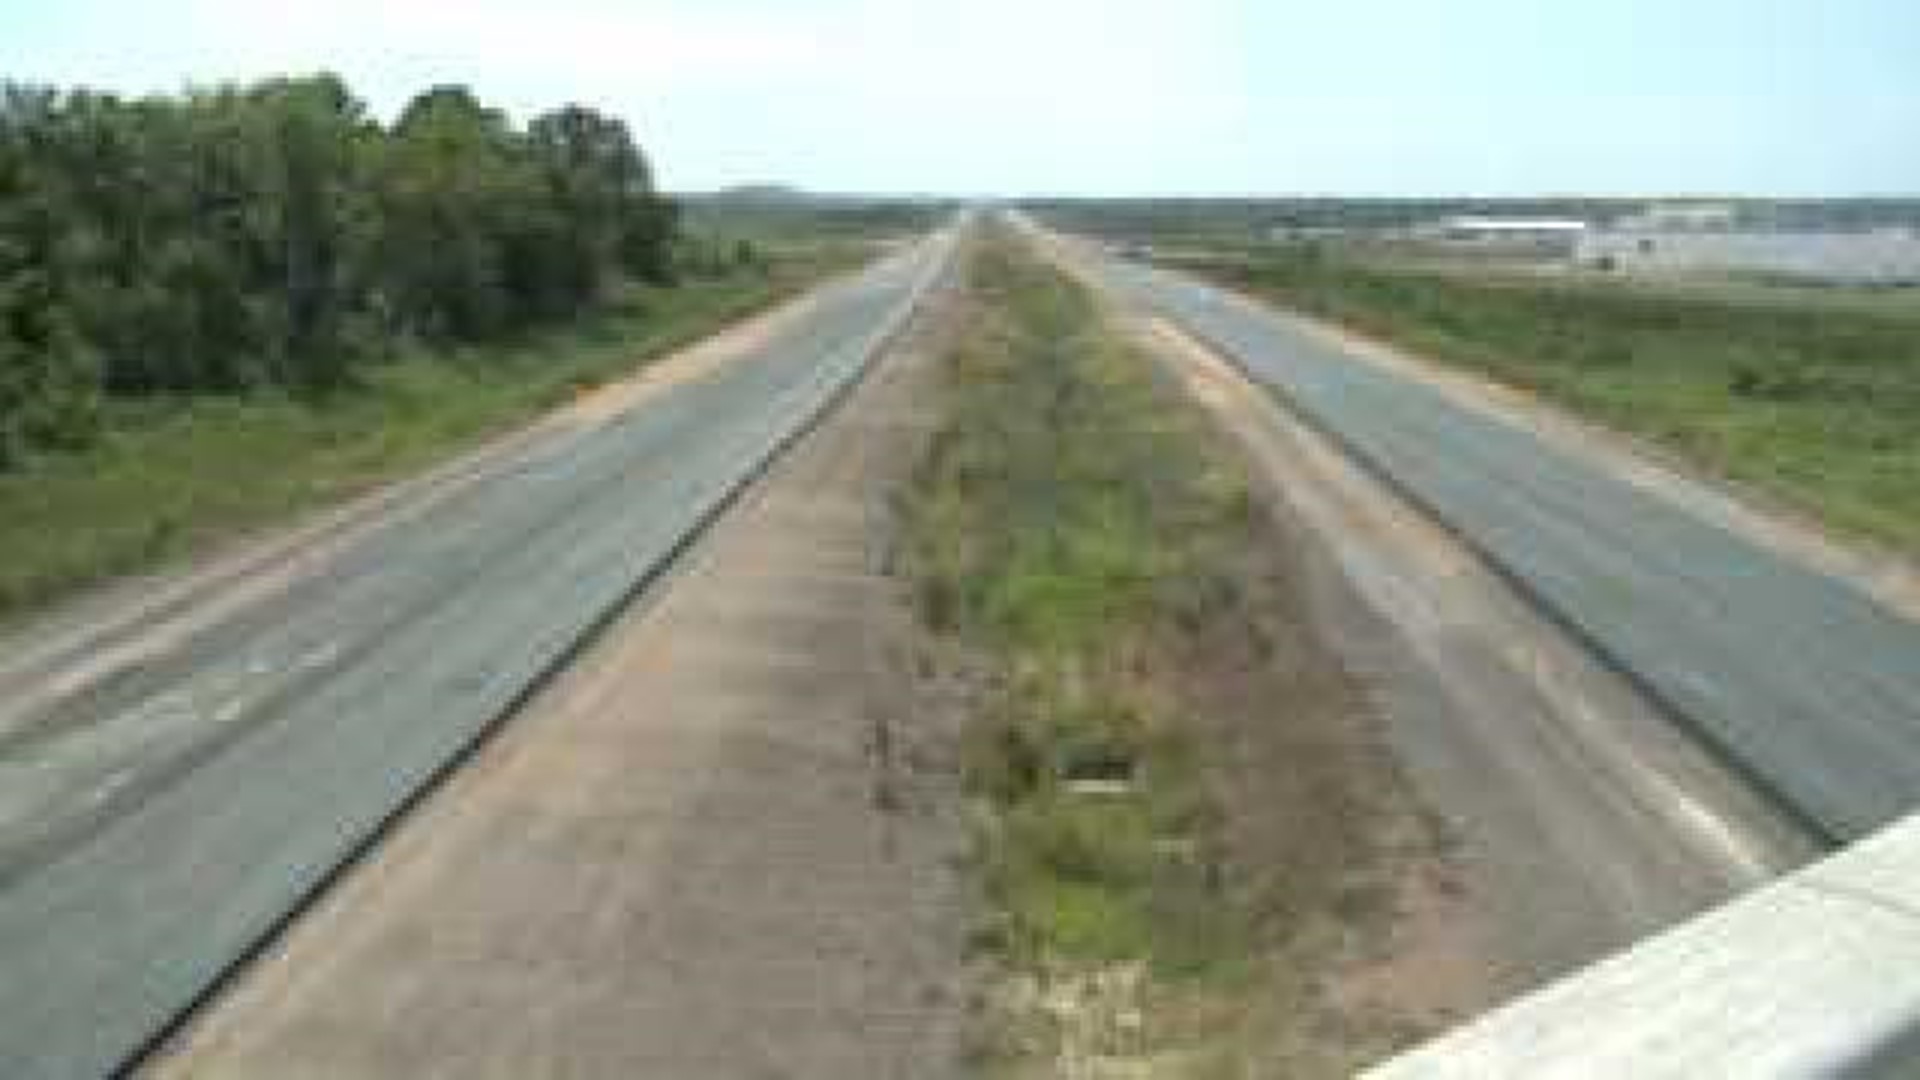 Highway Officials Discuss Ways to Speed Up I-49